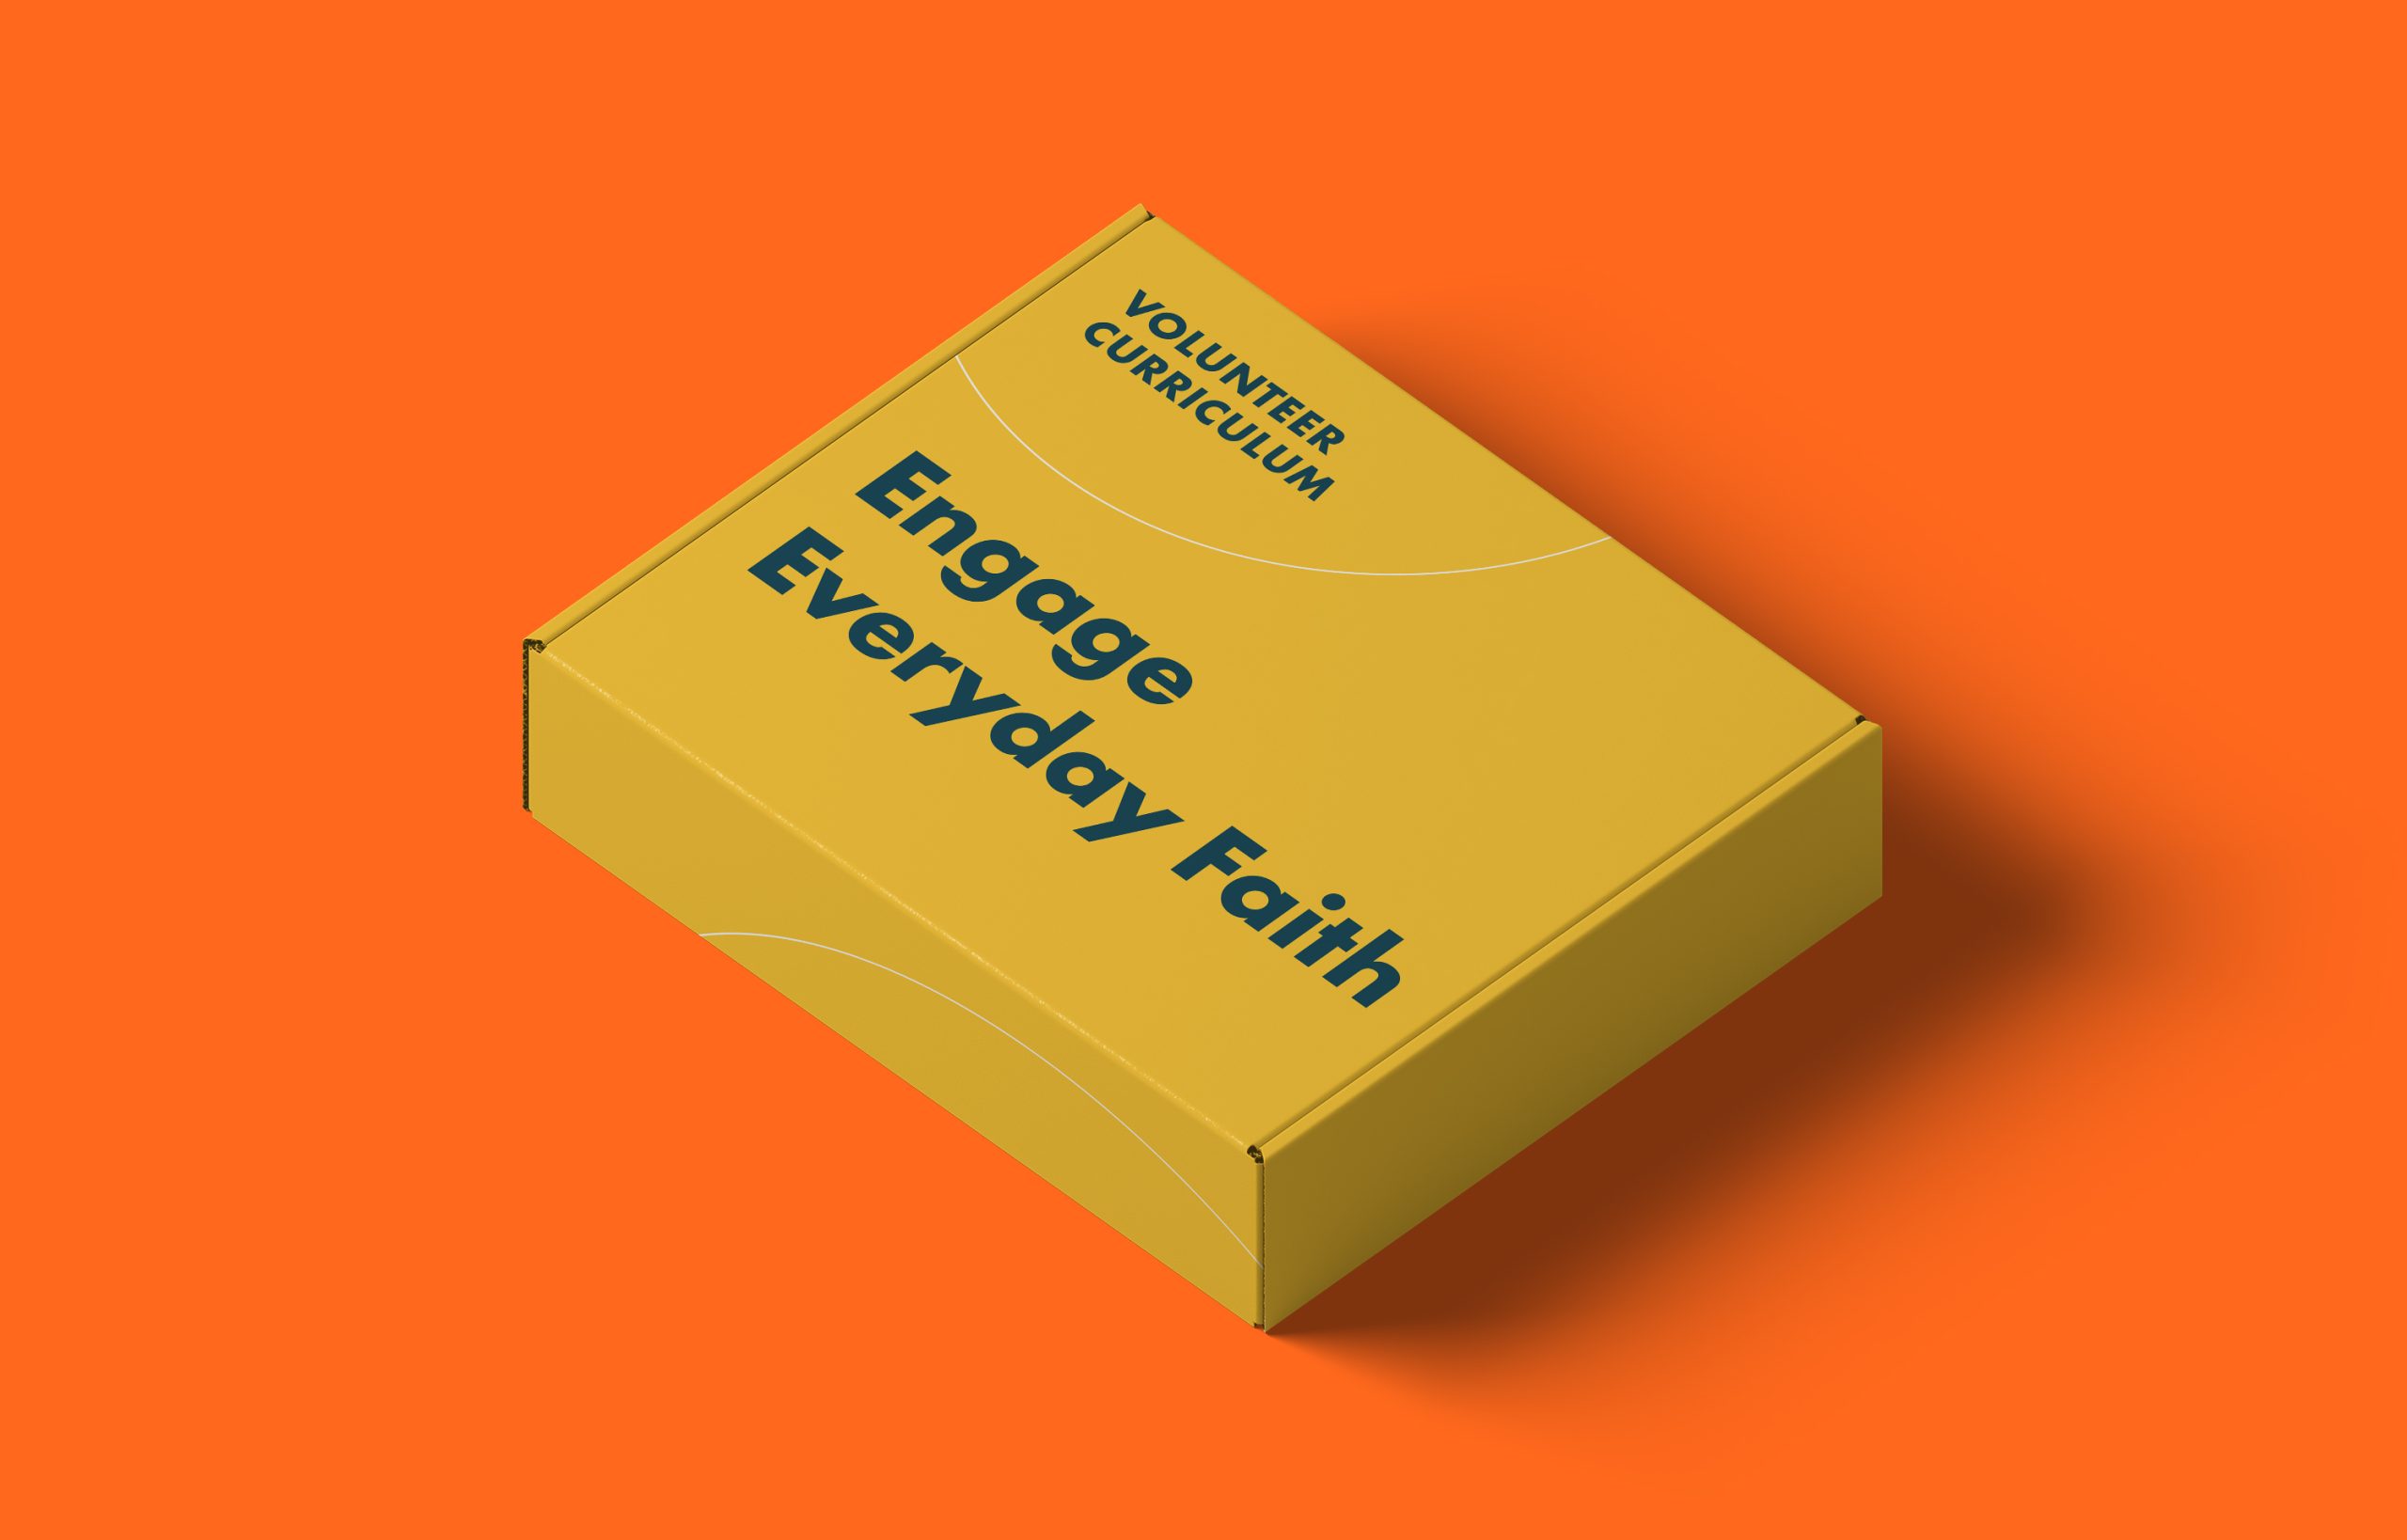 Engage Everyday Faith – Volunteer Training Kit